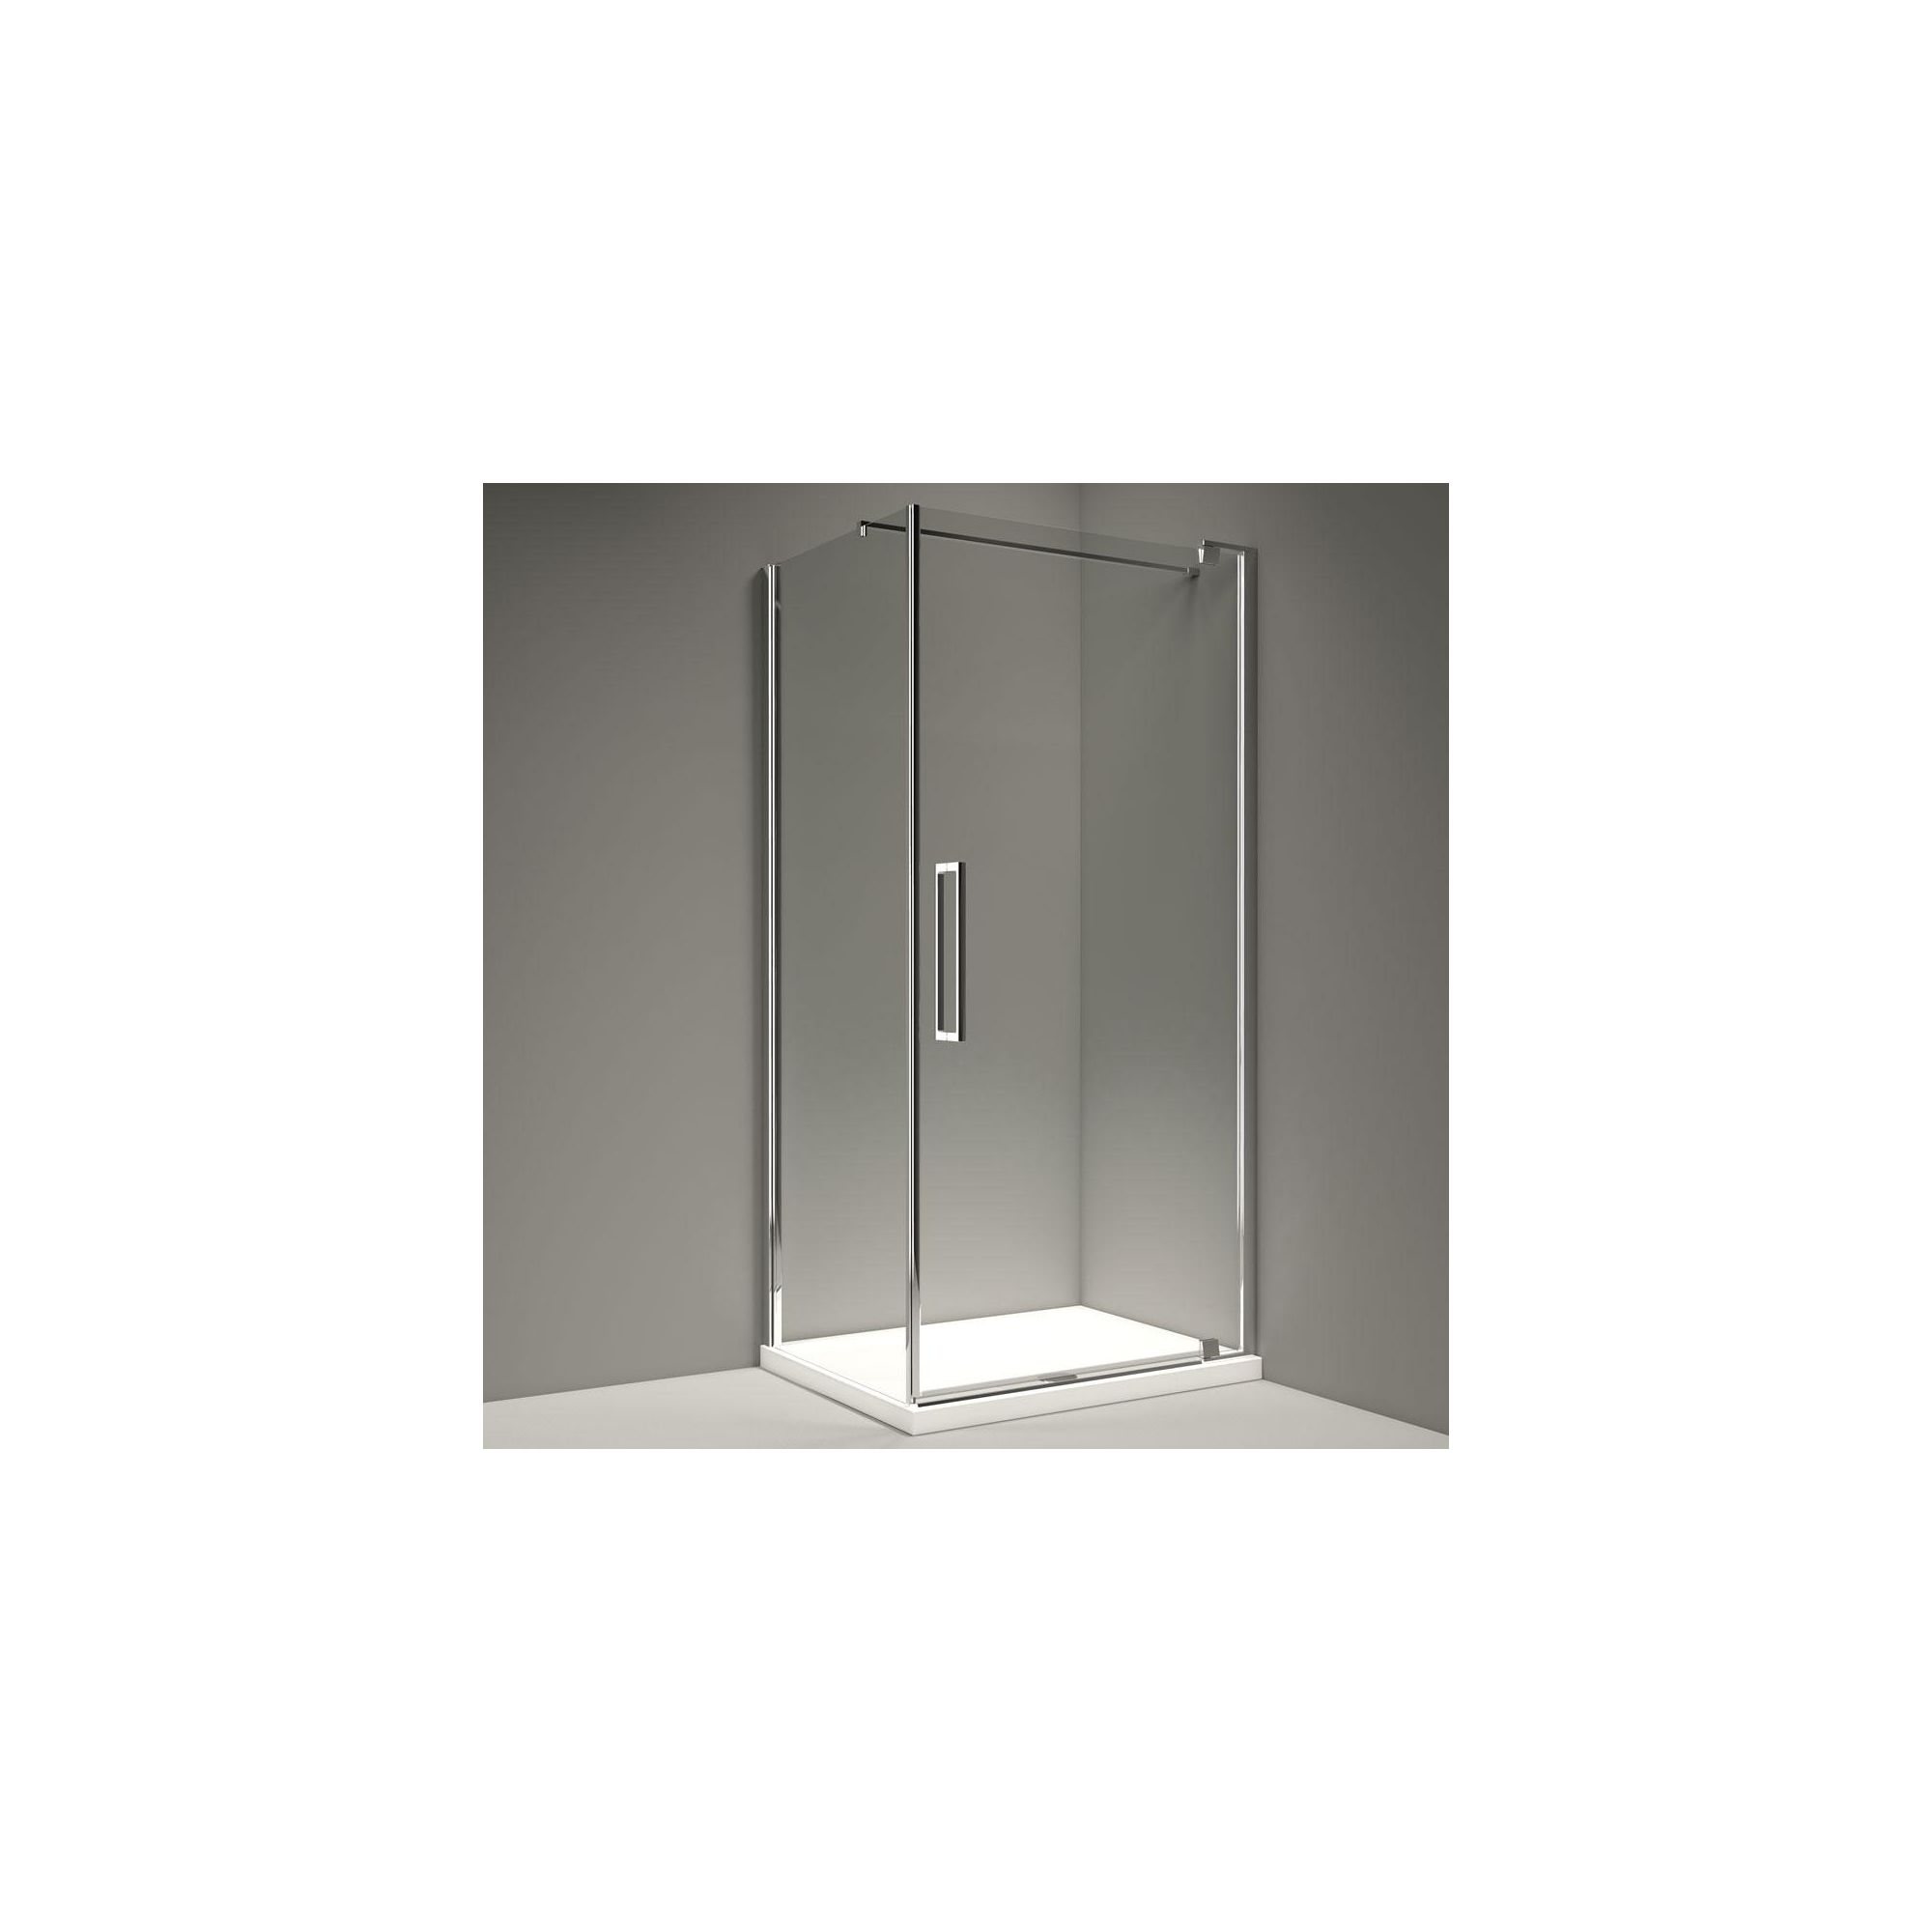 Merlyn Series 10 Pivot Shower Door, 900mm Wide, 10mm Clear Glass at Tesco Direct